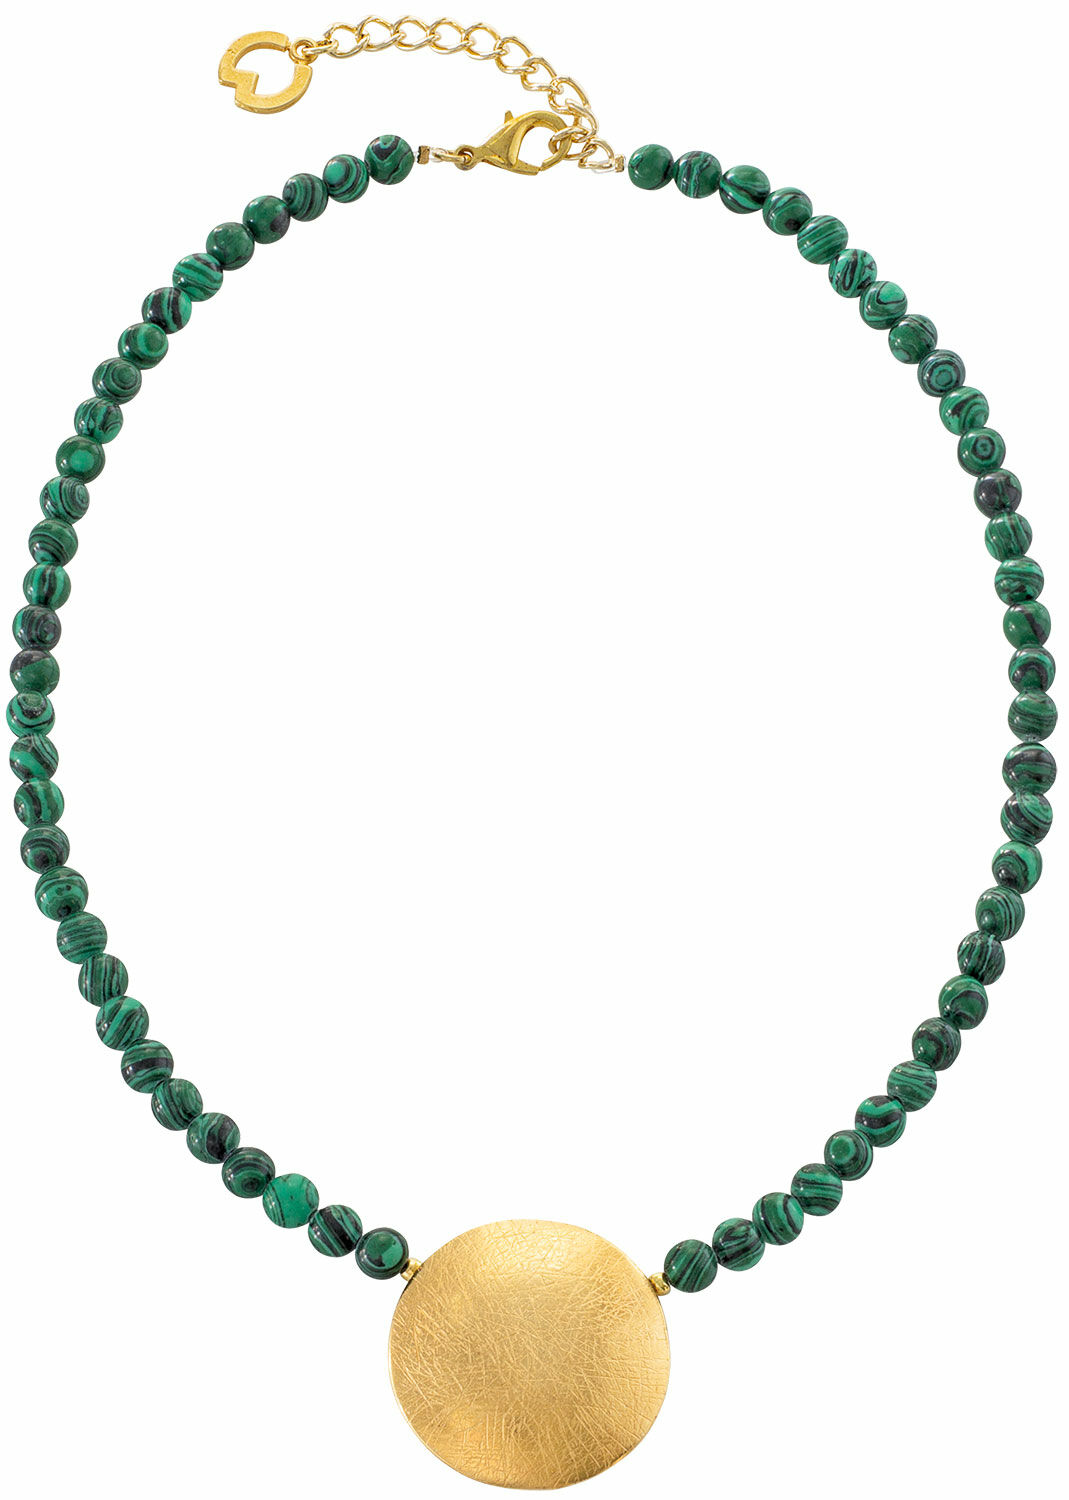 Necklace "Sun Disc" with malachite beads by Petra Waszak